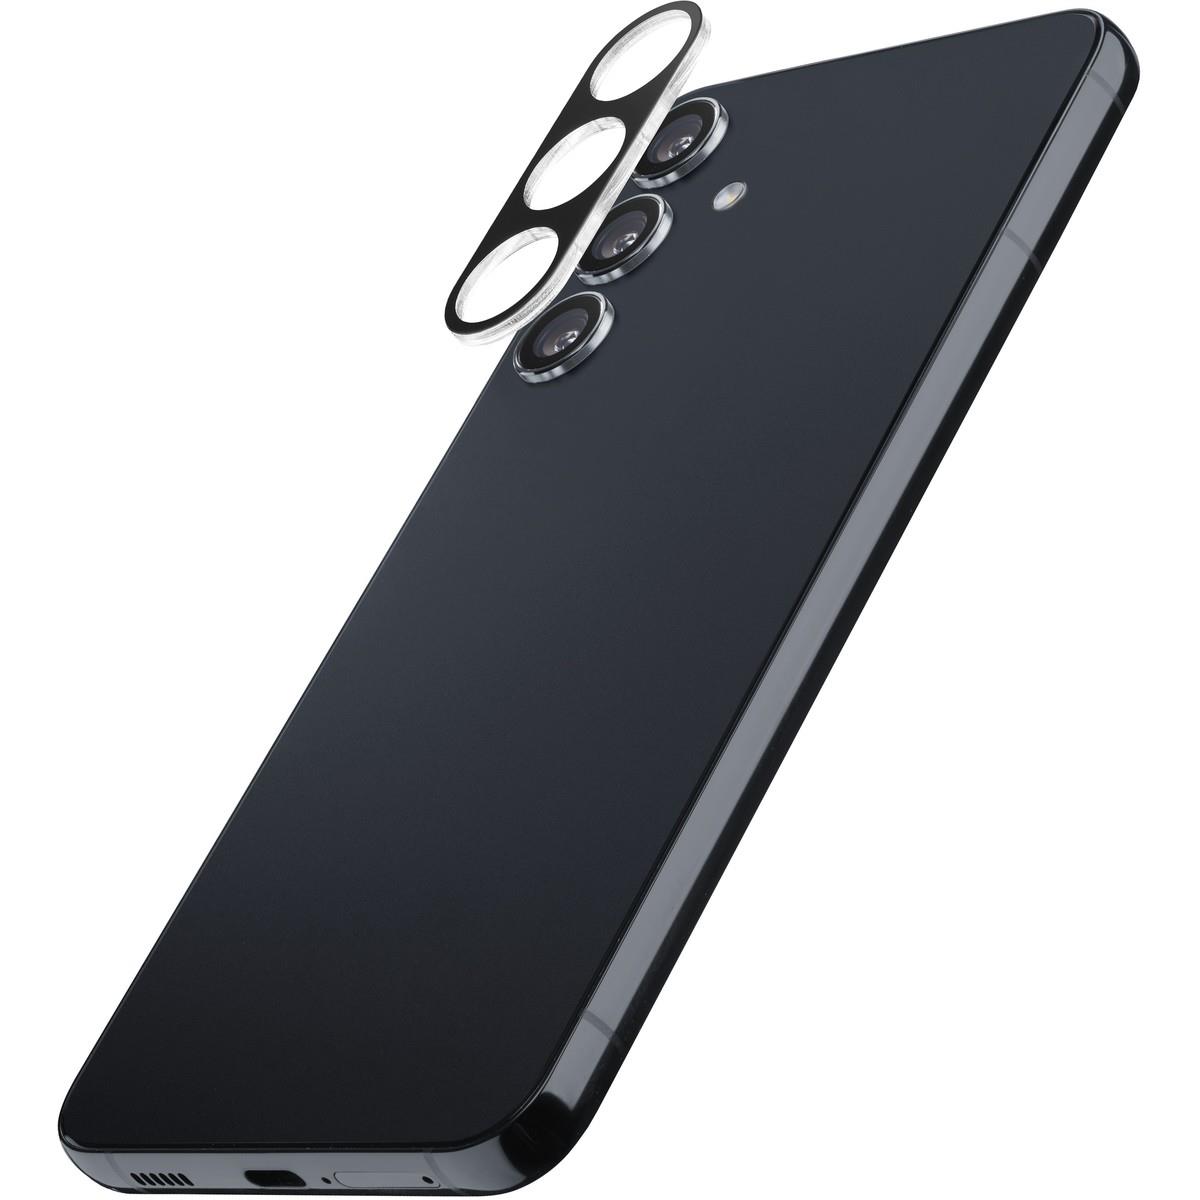 Schutzglas CAMERA LENS für Samsung Galaxy A54